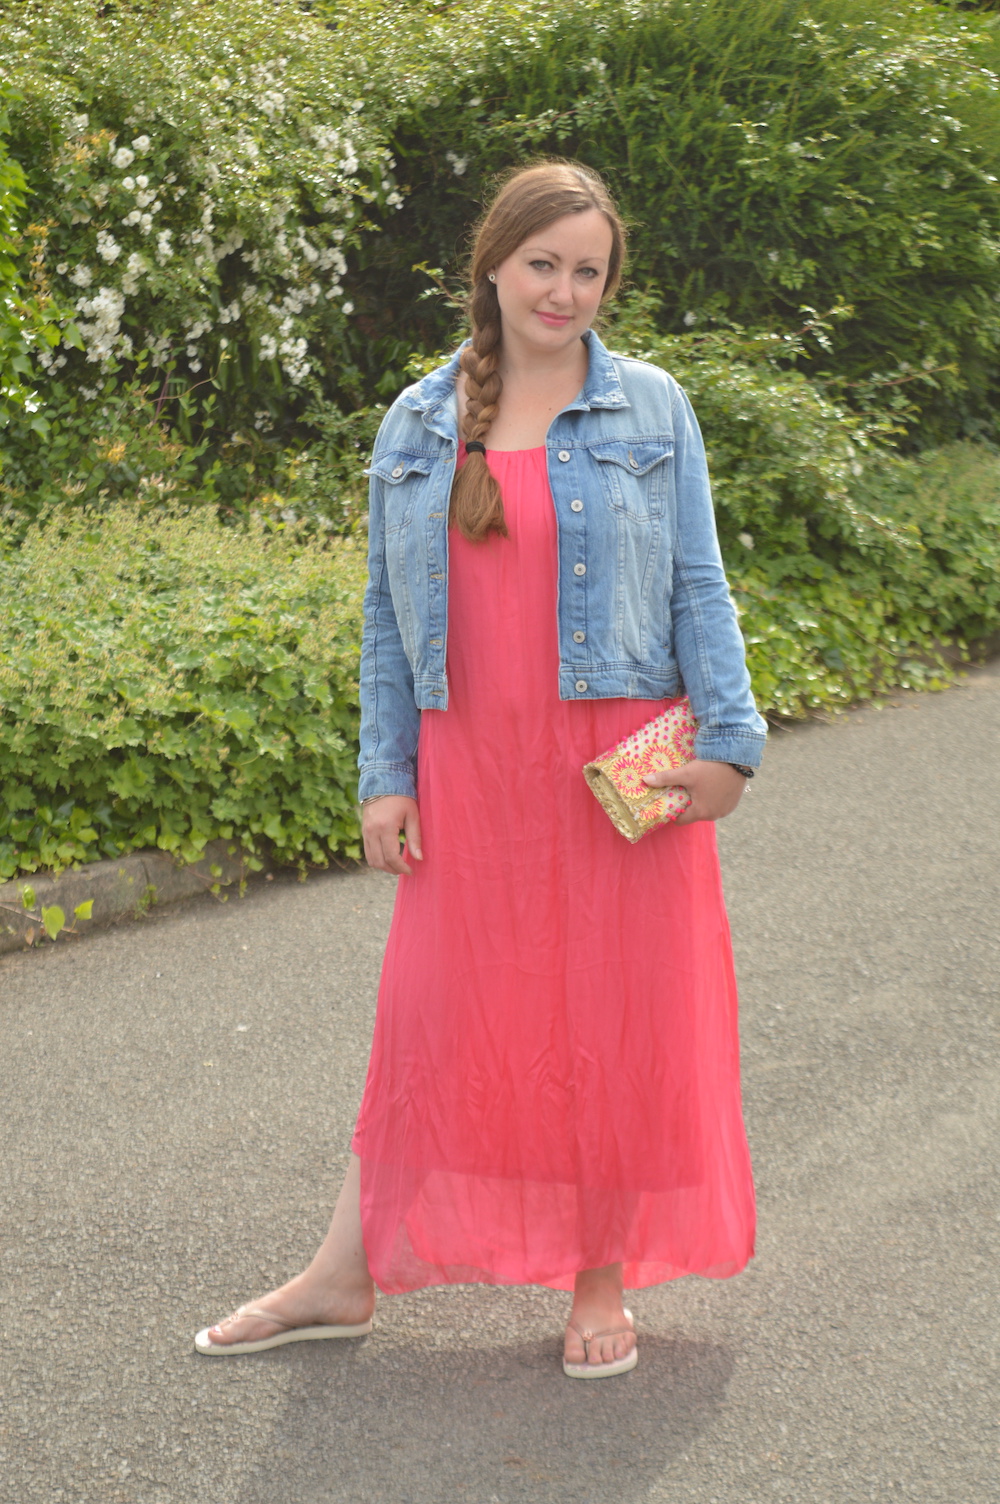 Bright pink beach dress